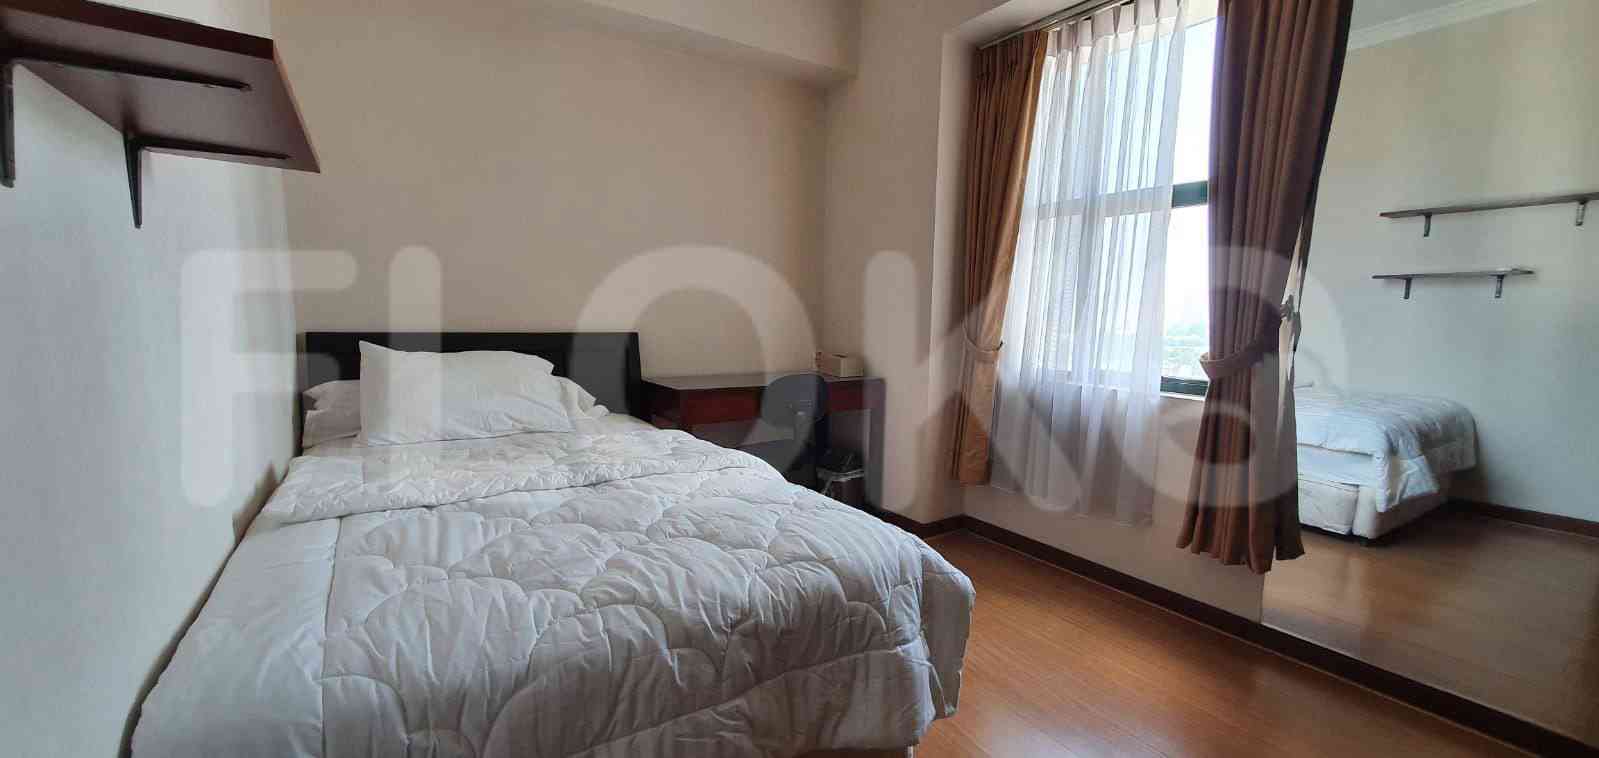 3 Bedroom on 27th Floor for Rent in Aryaduta Suites Semanggi - fsu7eb 3